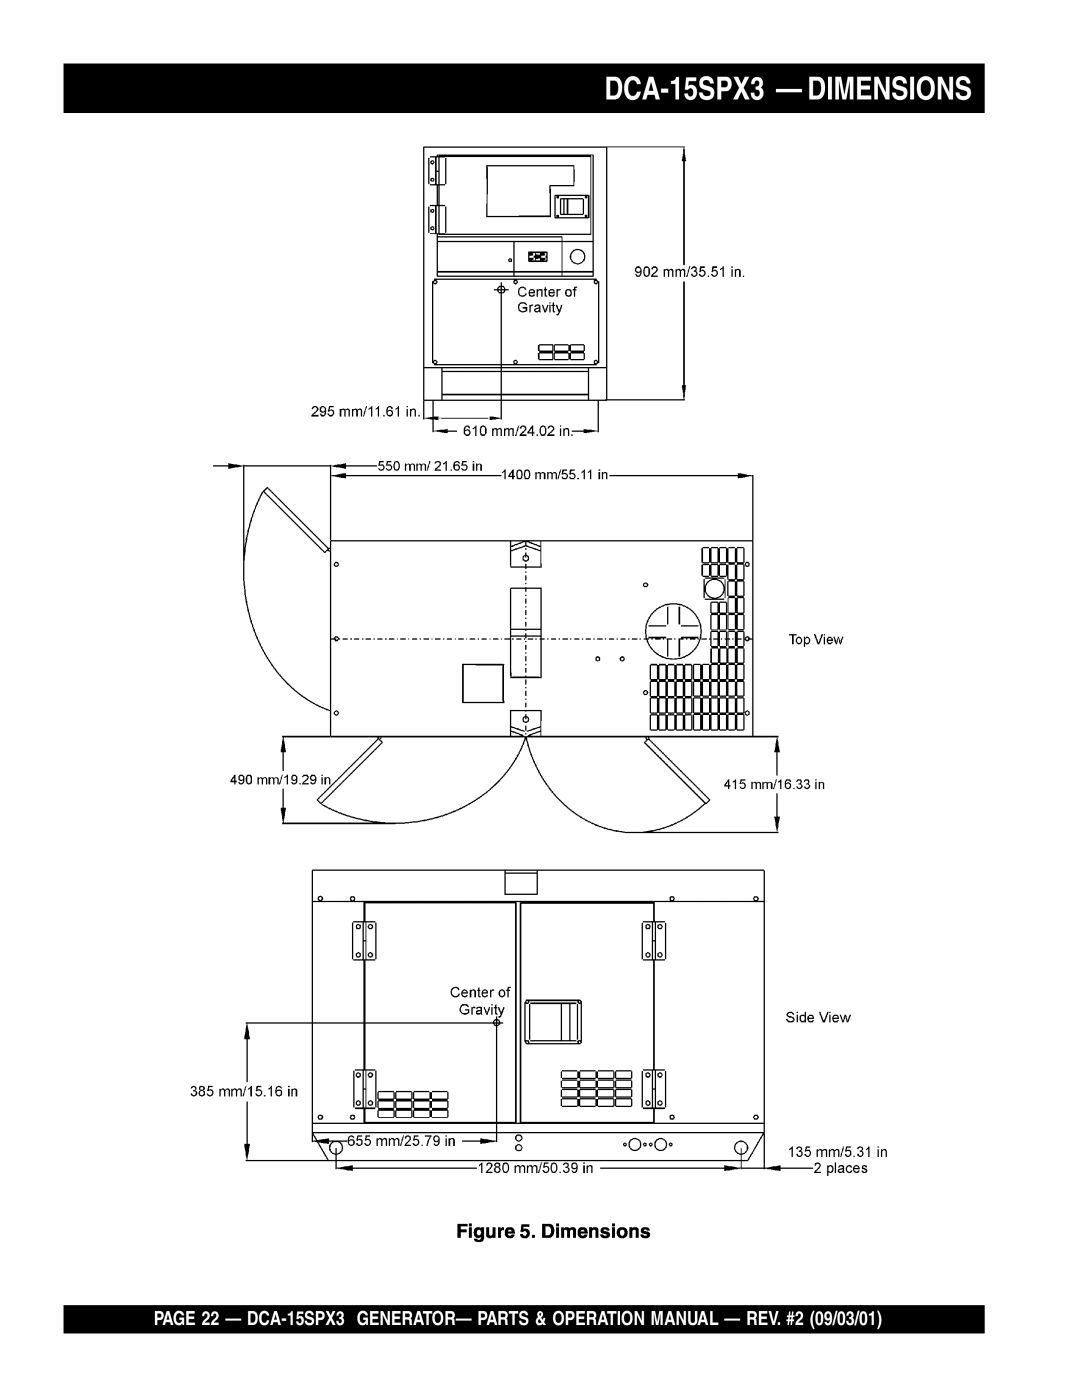 Multiquip operation manual DCA-15SPX3— DIMENSIONS, Dimensions 